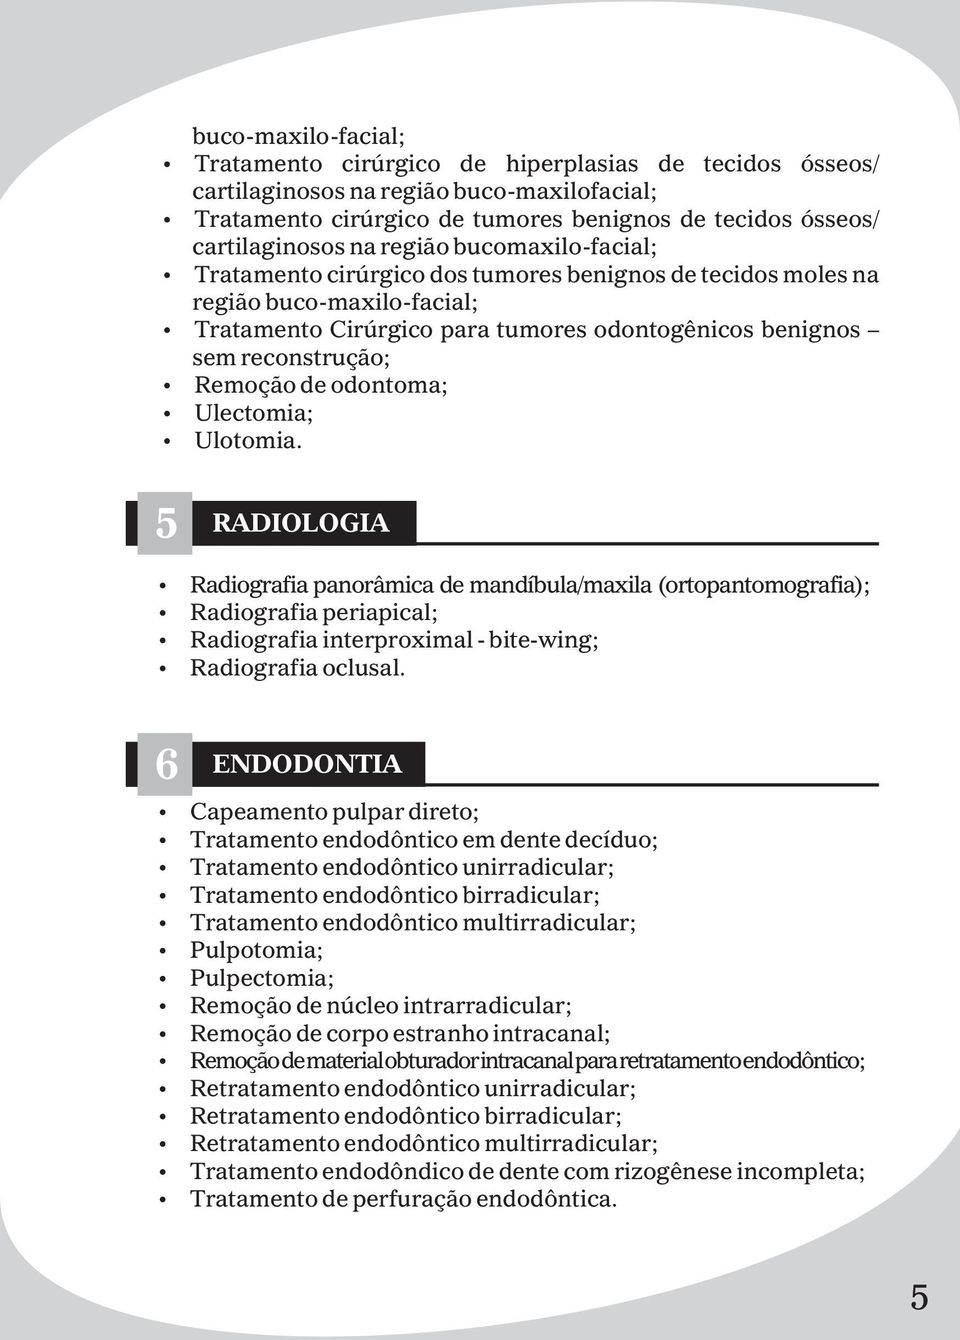 de odontoma; Ulectomia; Ulotomia. 5 RADIOLOGIA Radiografia panorâmica de mandíbula/maxila (ortopantomografia); Radiografia periapical; Radiografia interproximal - bite-wing; Radiografia oclusal.